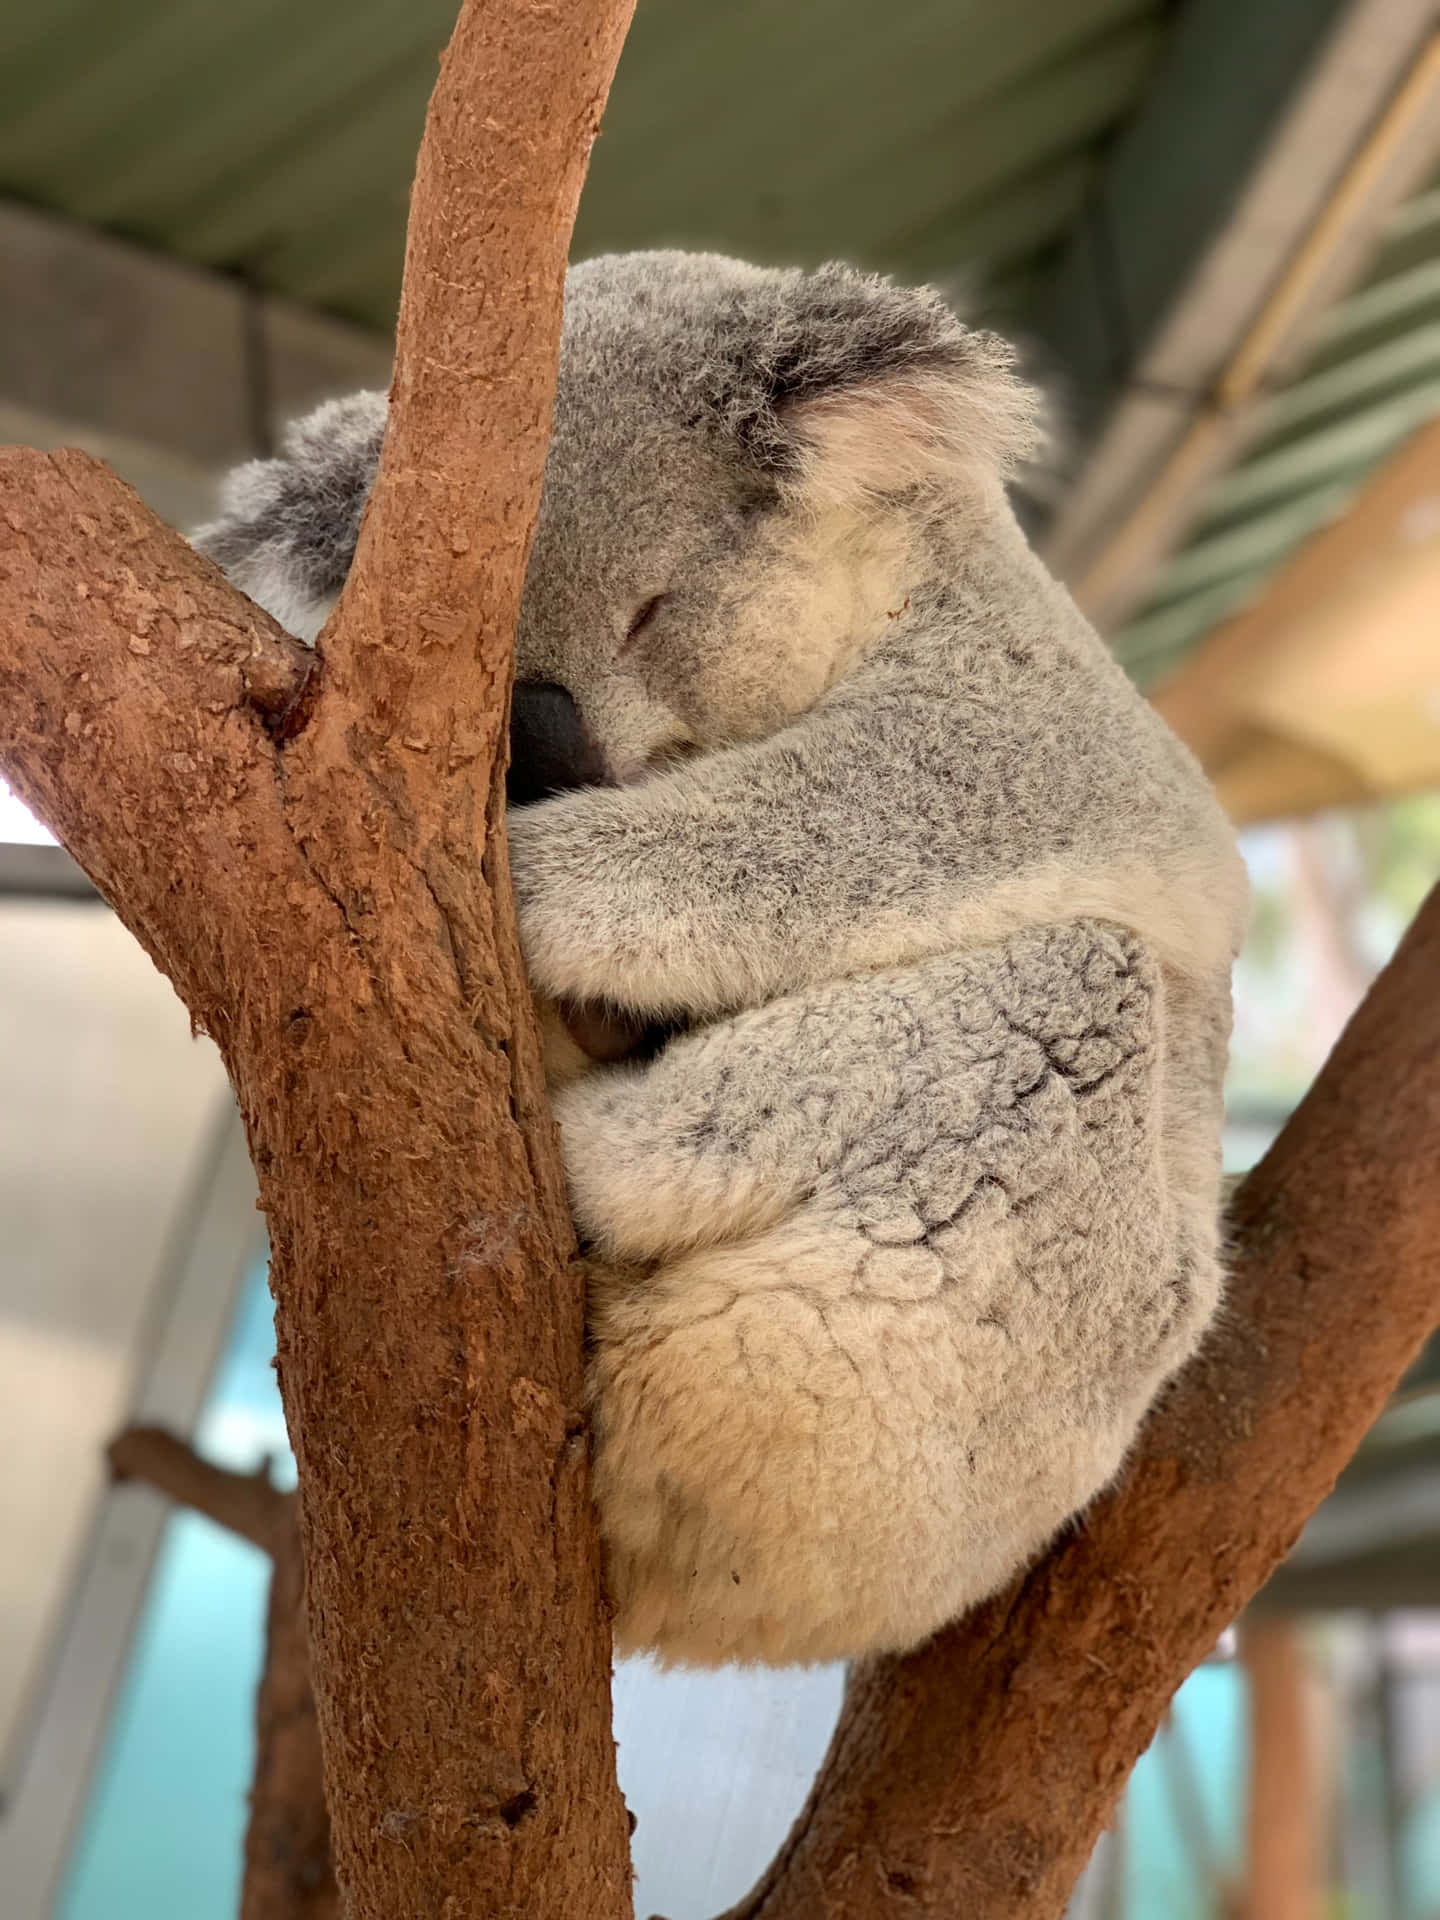 Cute and cuddly koala bear taking a nap